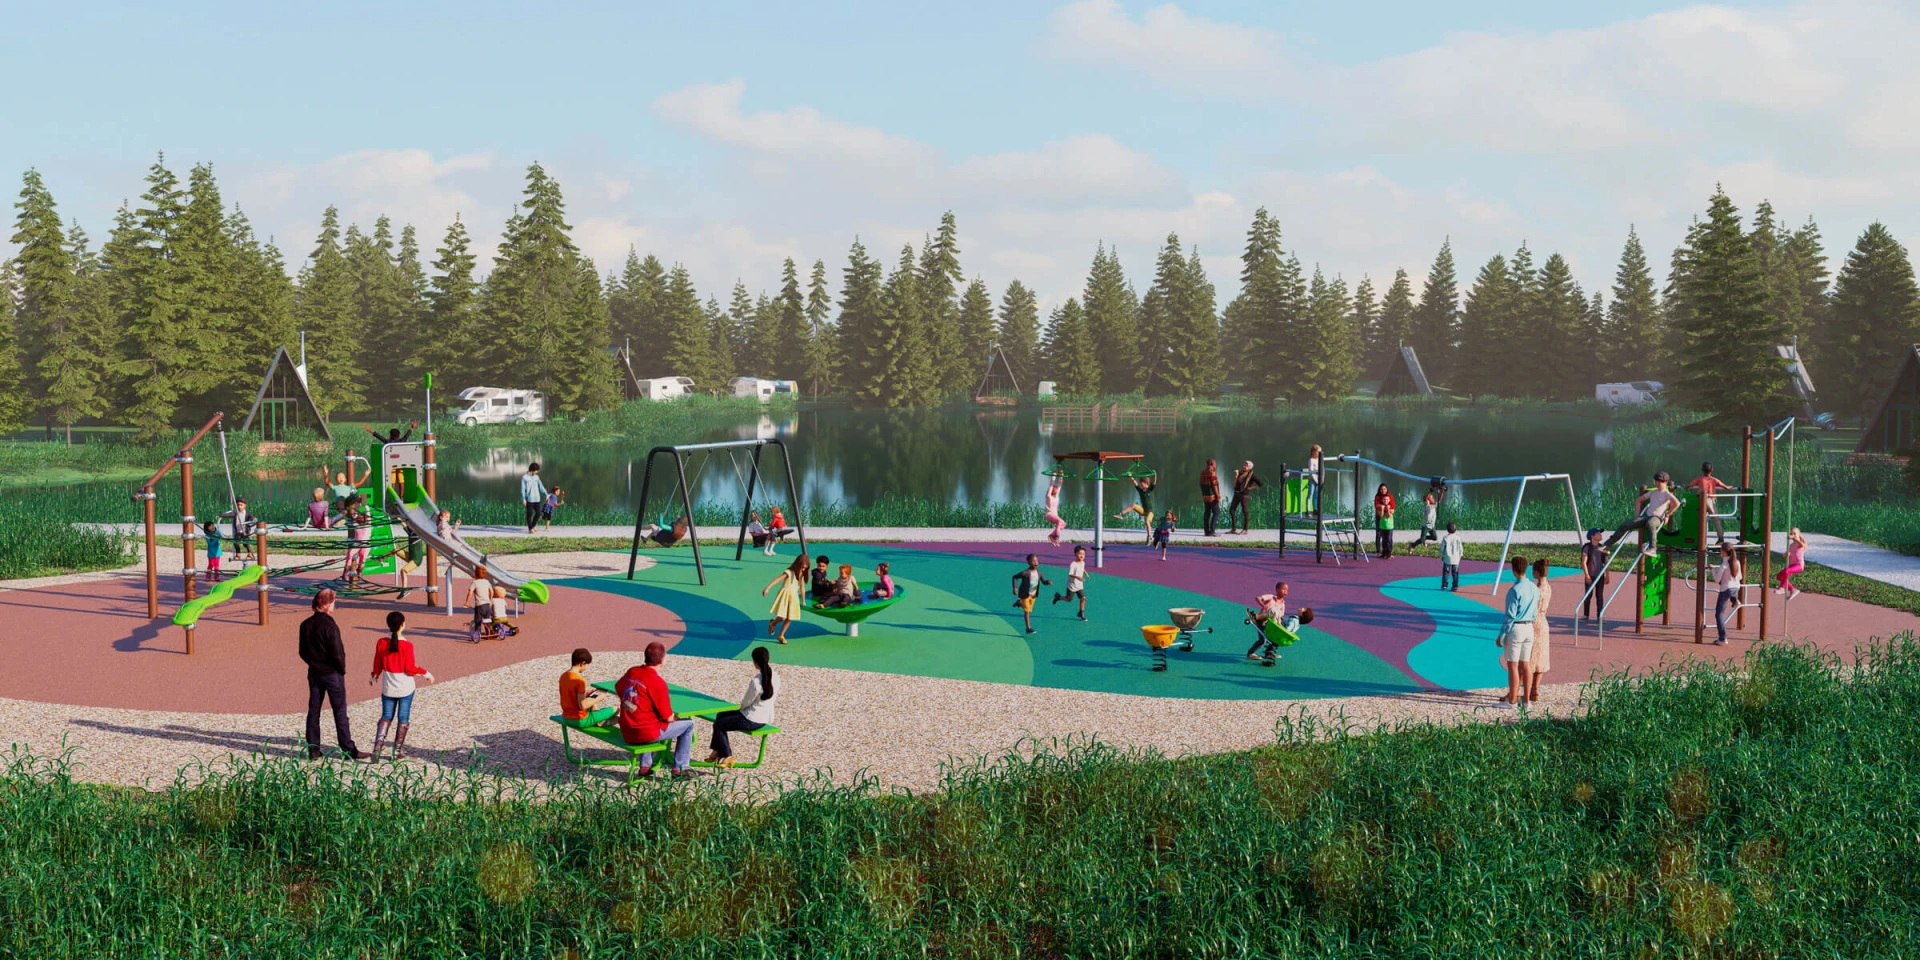 Design idea of a camping ground playground